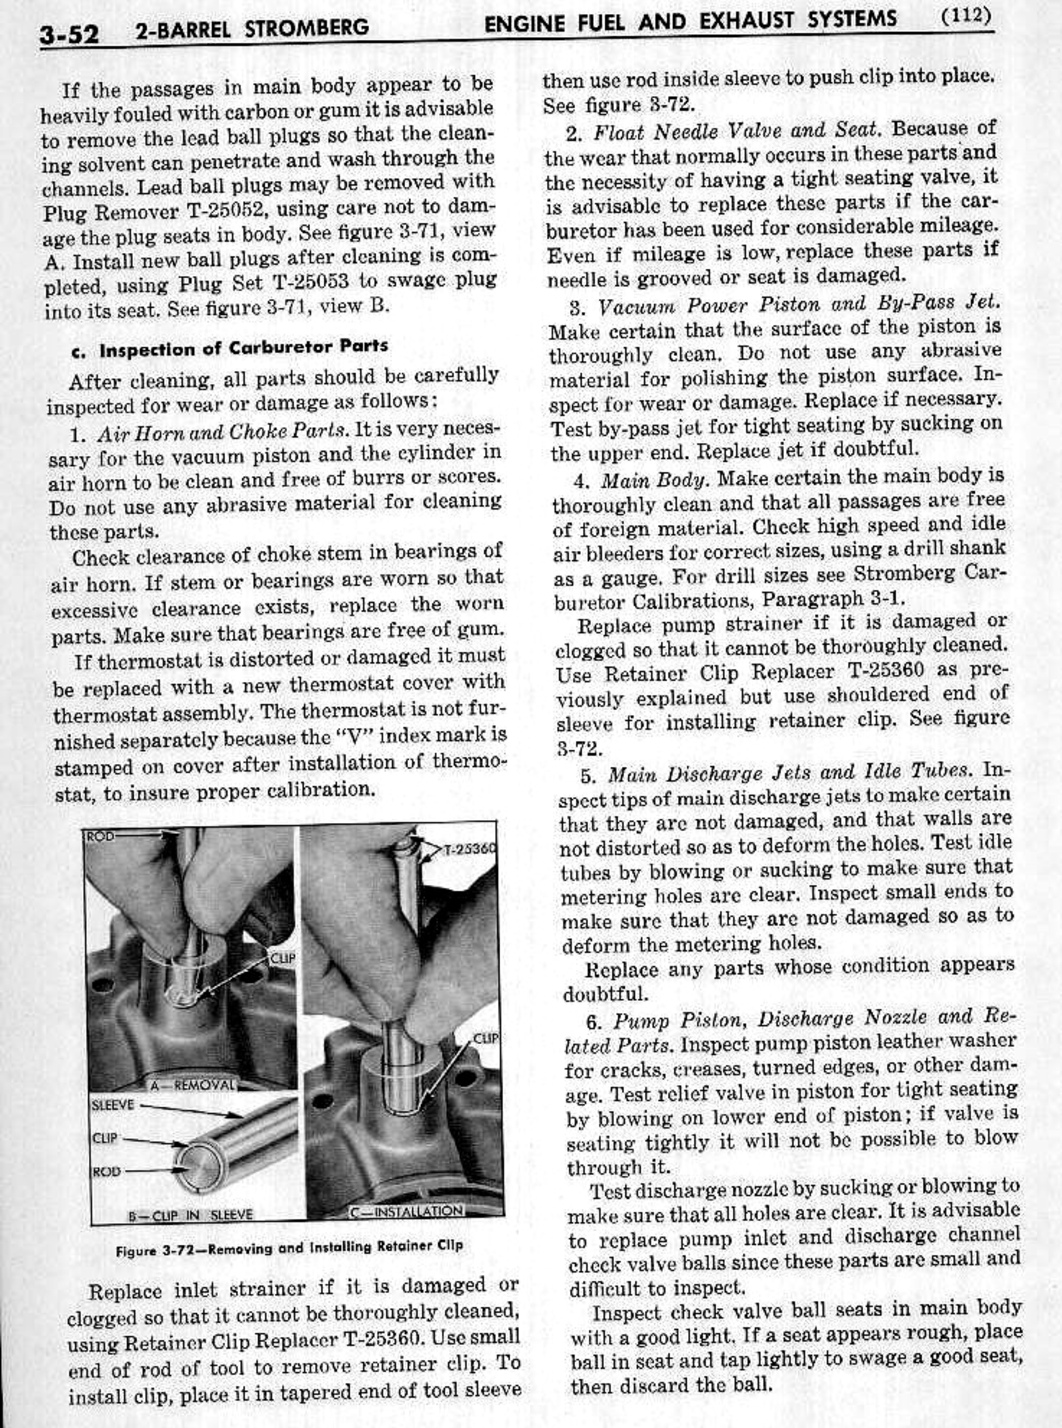 n_04 1953 Buick Shop Manual - Engine Fuel & Exhaust-052-052.jpg